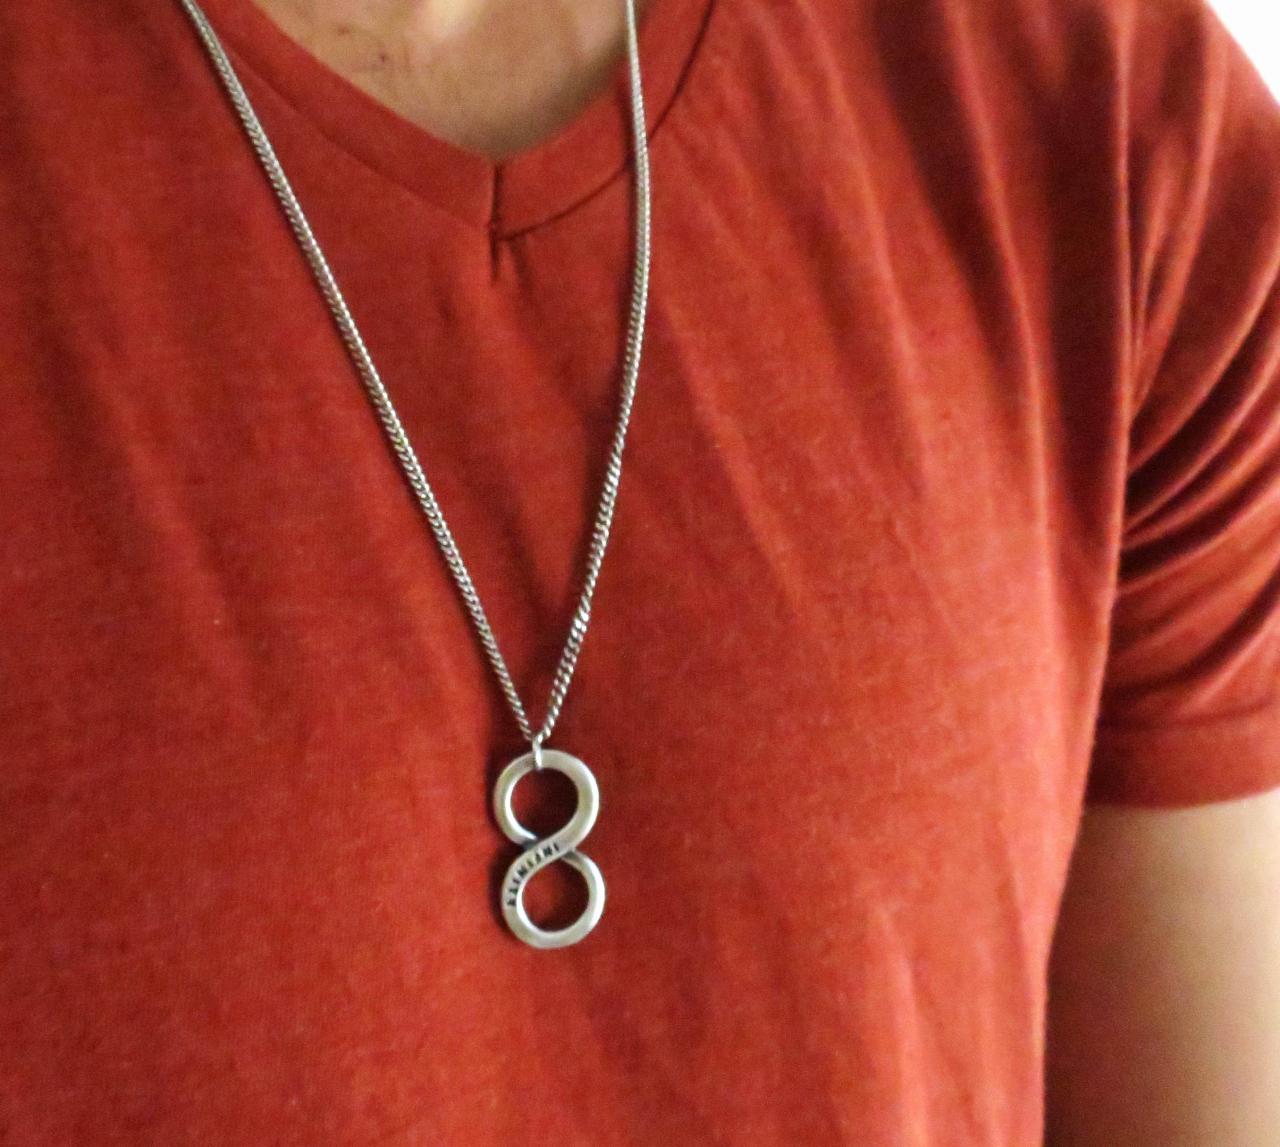 Men's Necklace - Men's Infinity Necklace - Men's Silver Necklace - Mens Jewelry - Necklaces For Men - Jewelry For Men